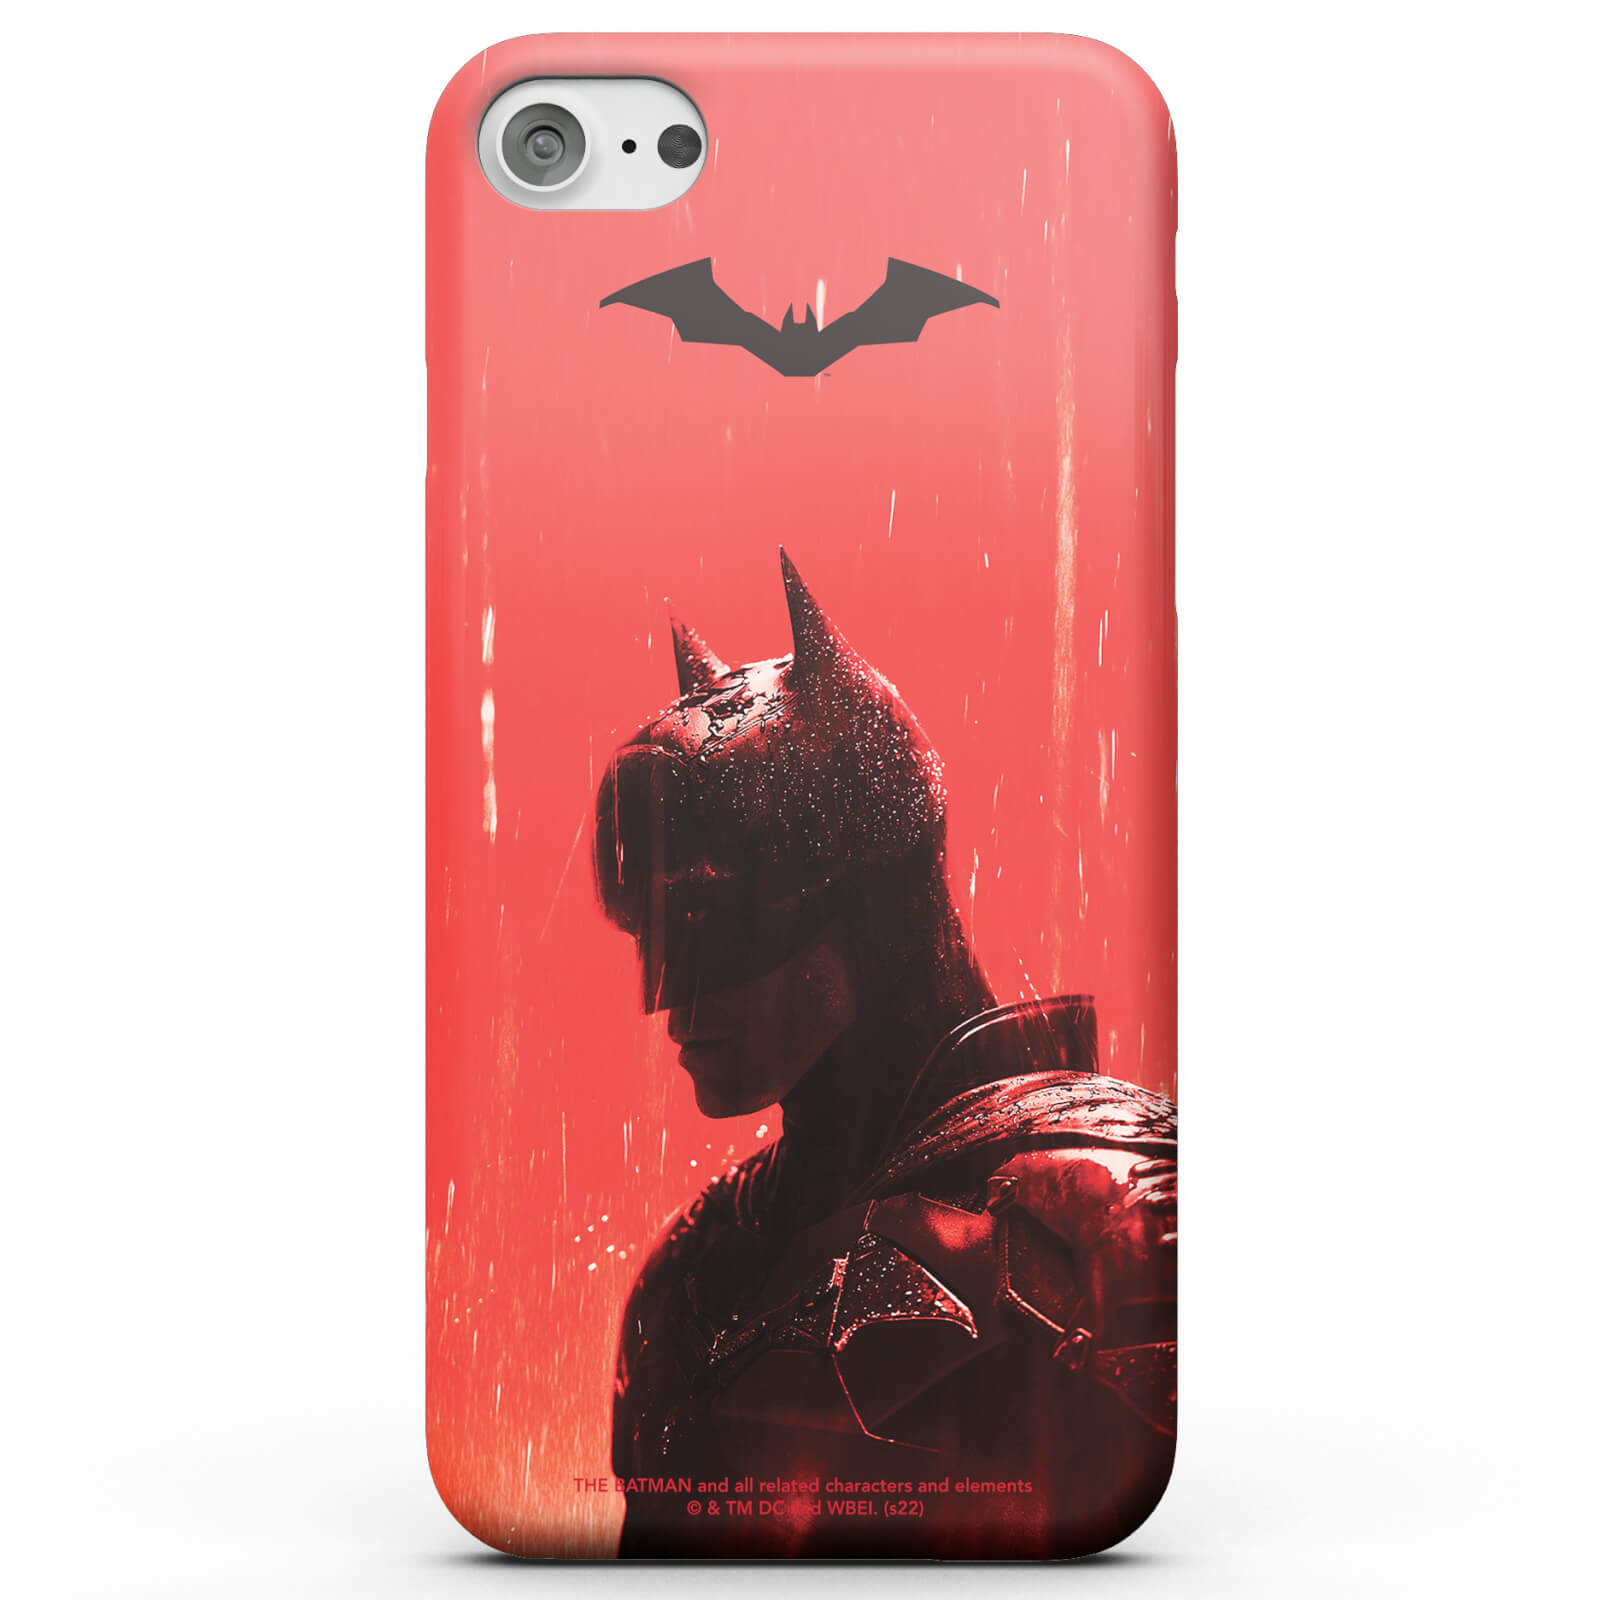 DC Batman The Bat Custodia per telefono iPhone e Android - iPhone 5/5s - Custodia a scatto - Opaca